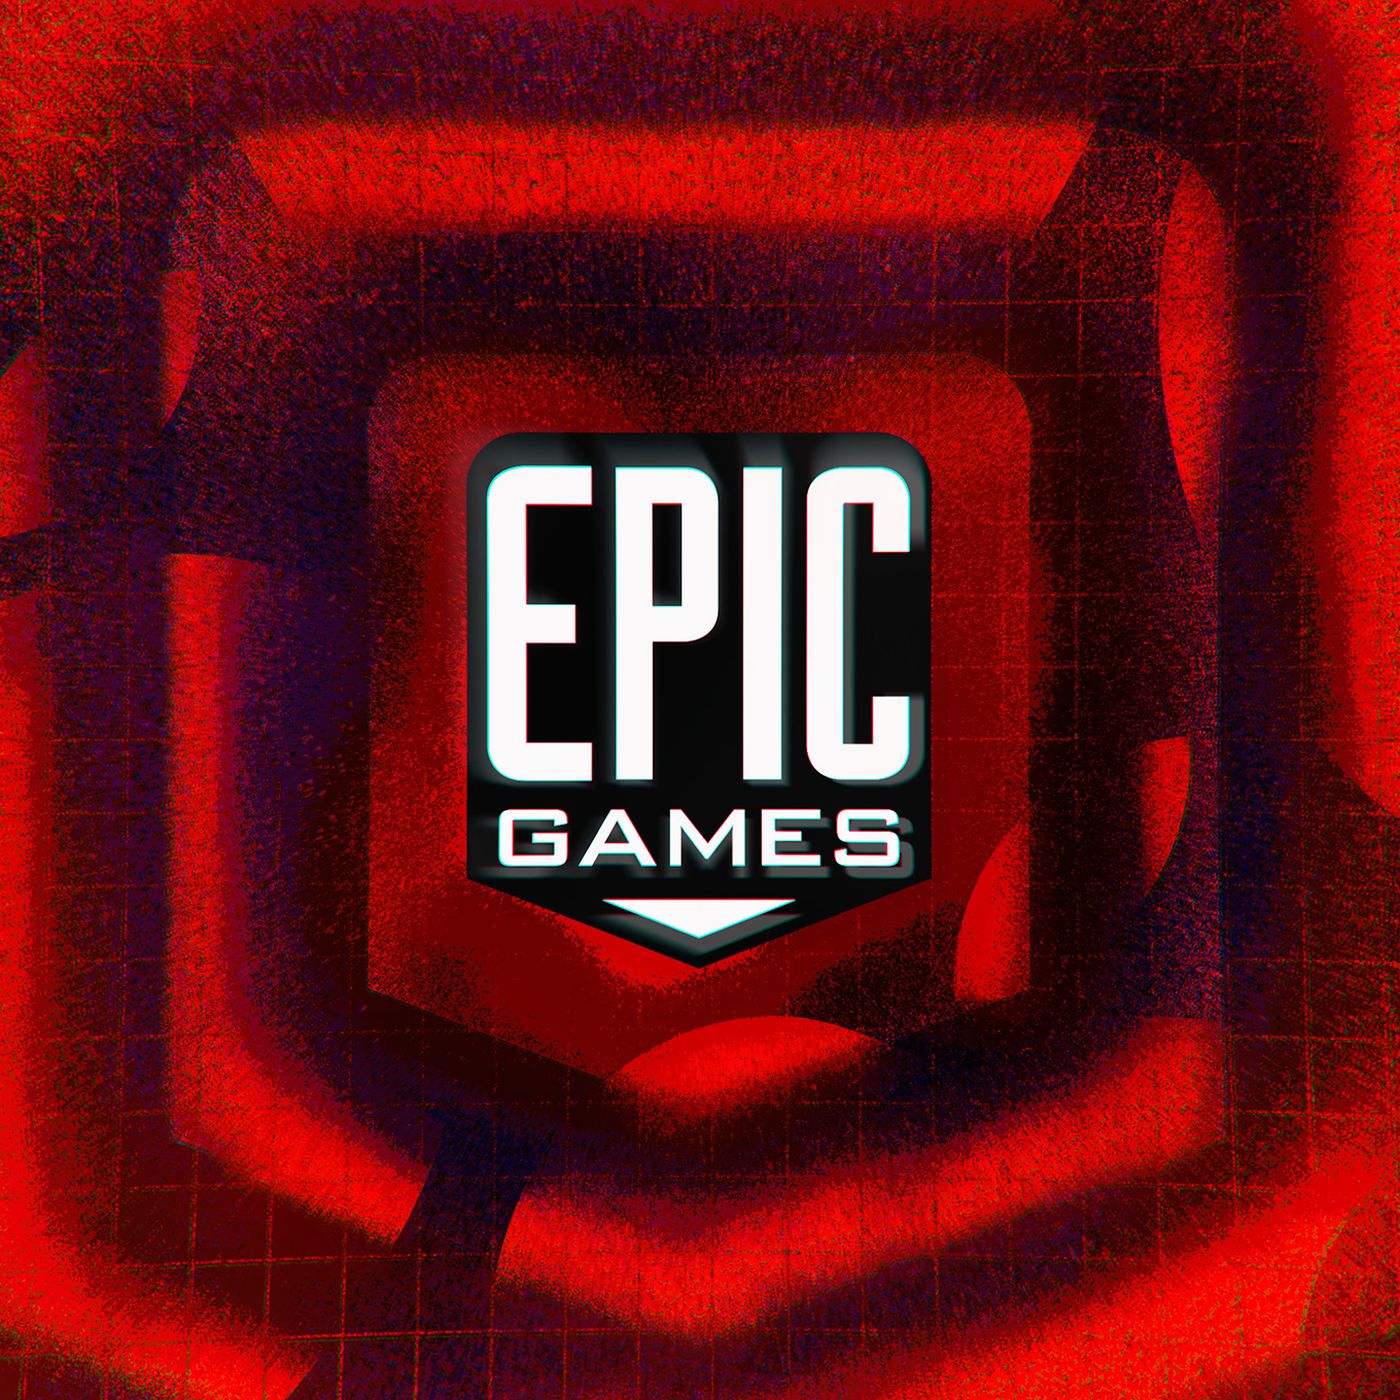 Games epic Download Epic